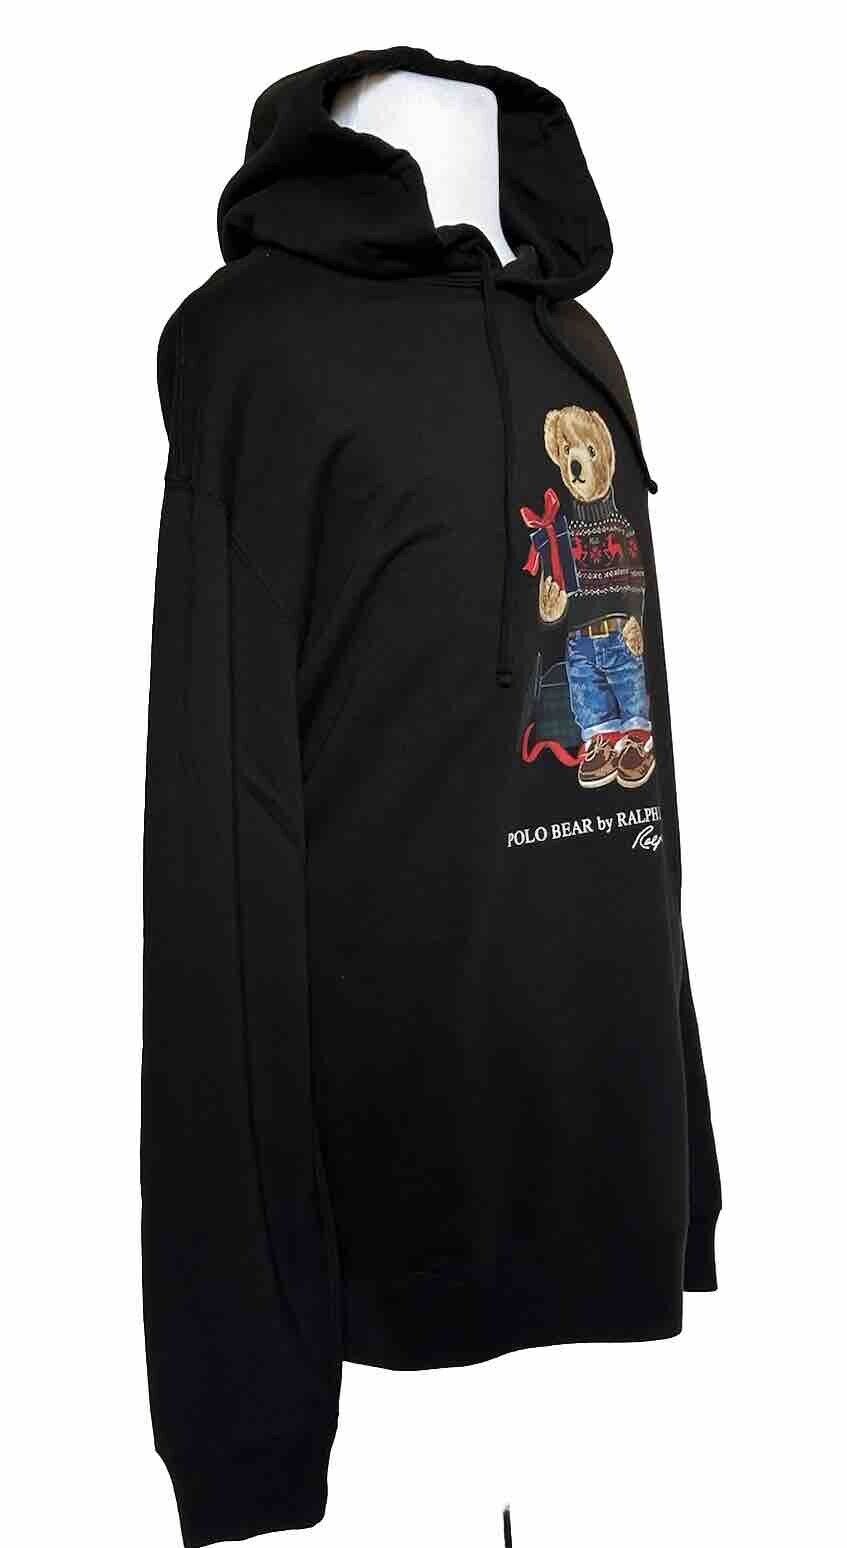 NWT $188 Polo Ralph Lauren Holiday Bear Sweatshirt with Hoodie Black 3XB/3TG